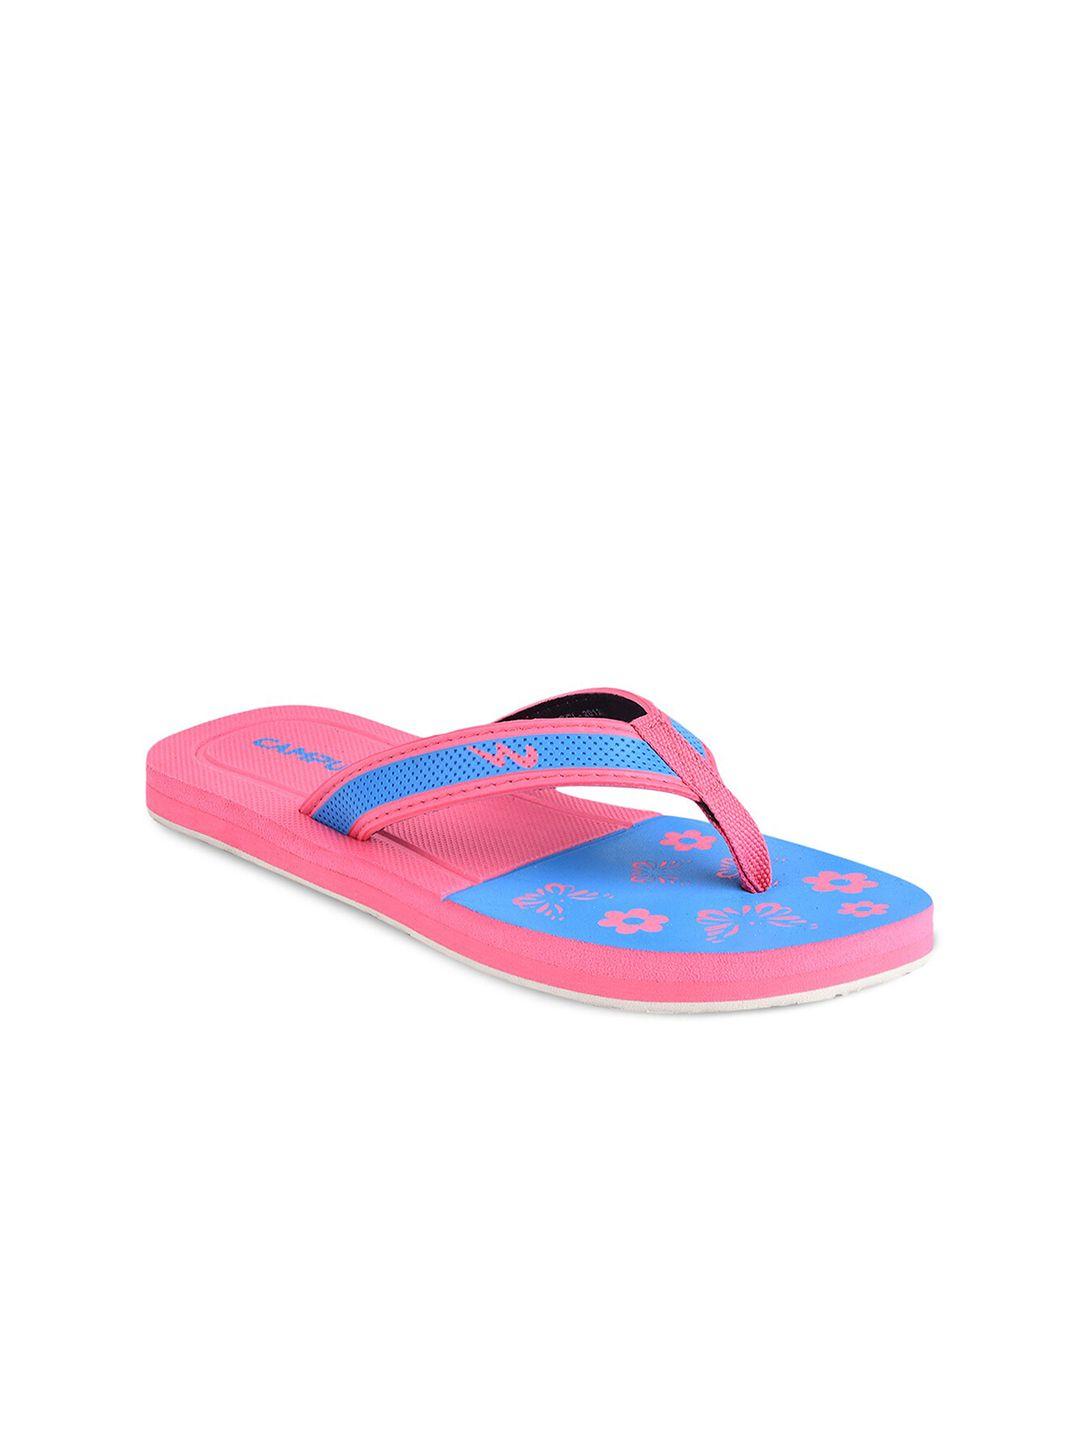 campus women pink & blue printed slip-on flip flops